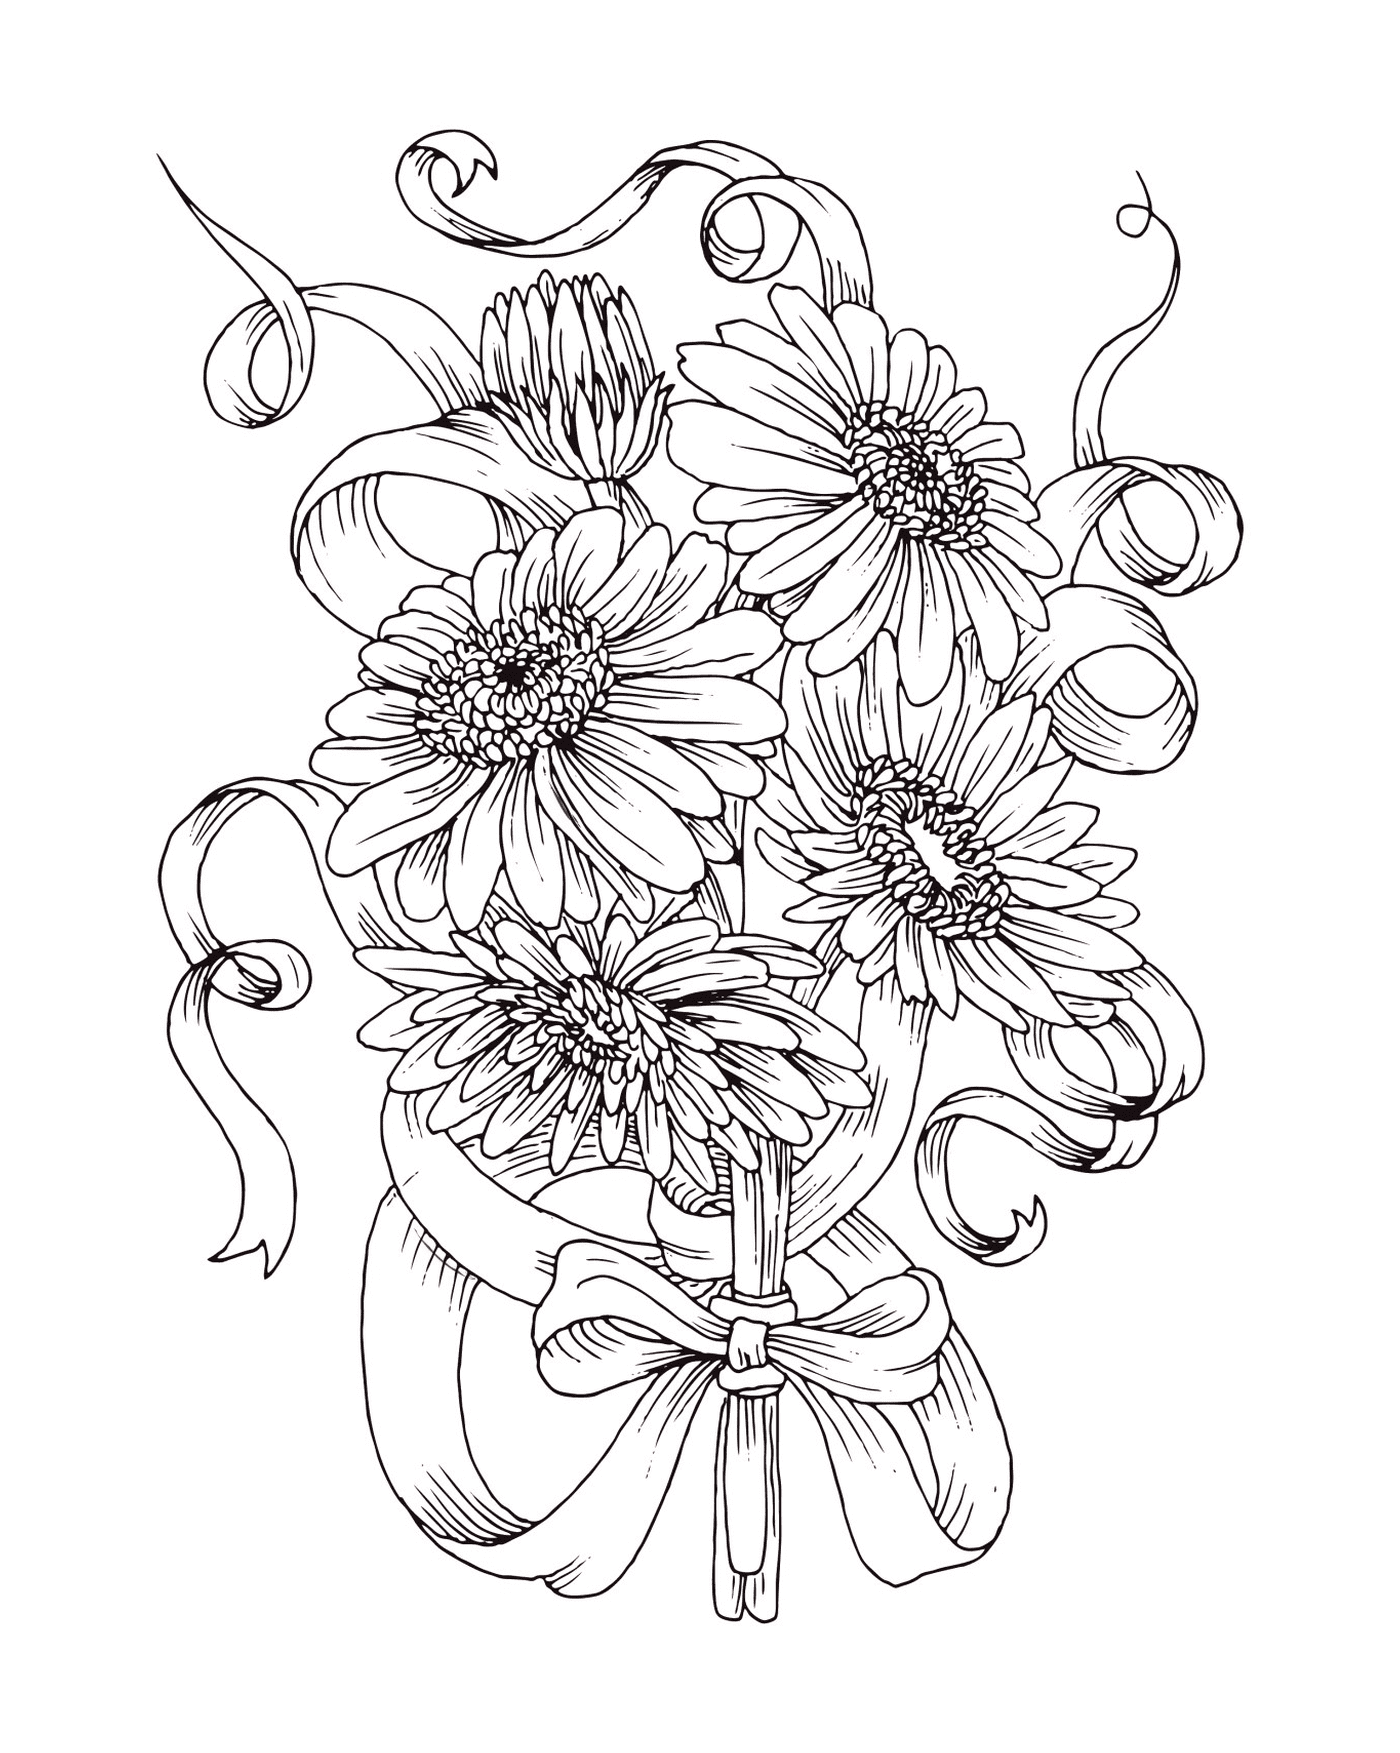  A beautiful bouquet of daisy flowers 